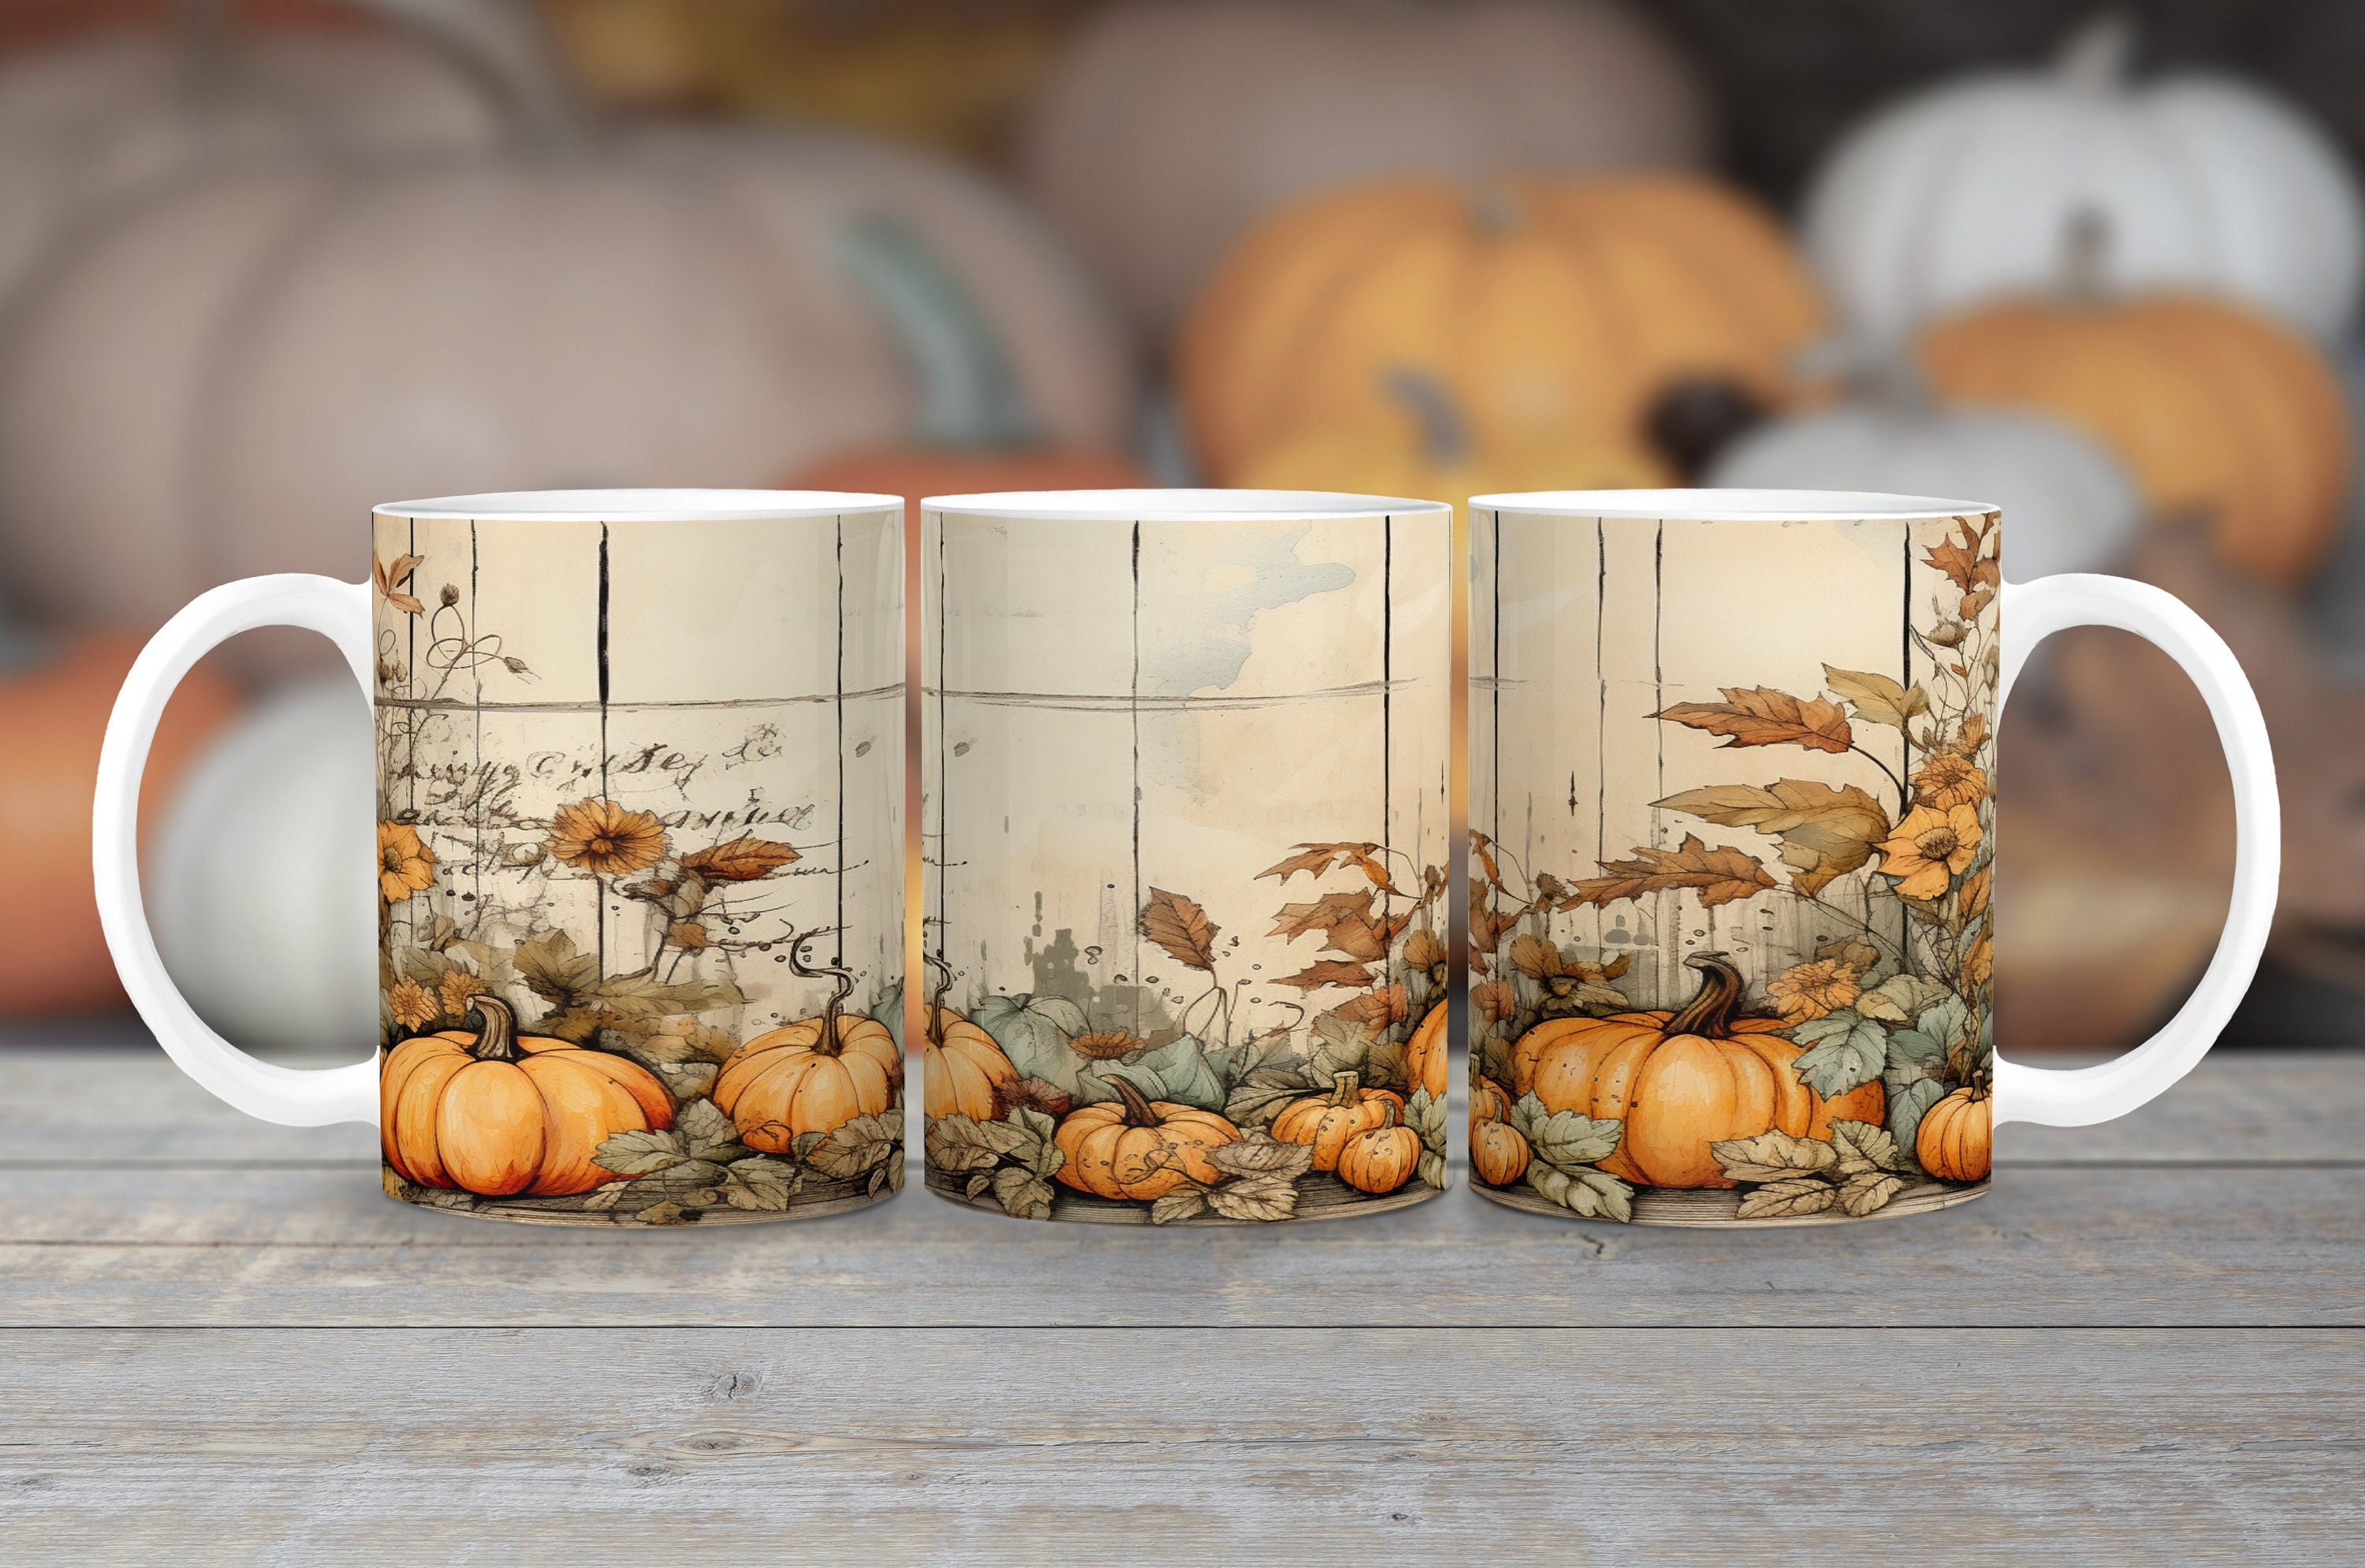 Pumpkin Leaves Dog Cat Printed Enamel Mugs Coffee Cups Fall